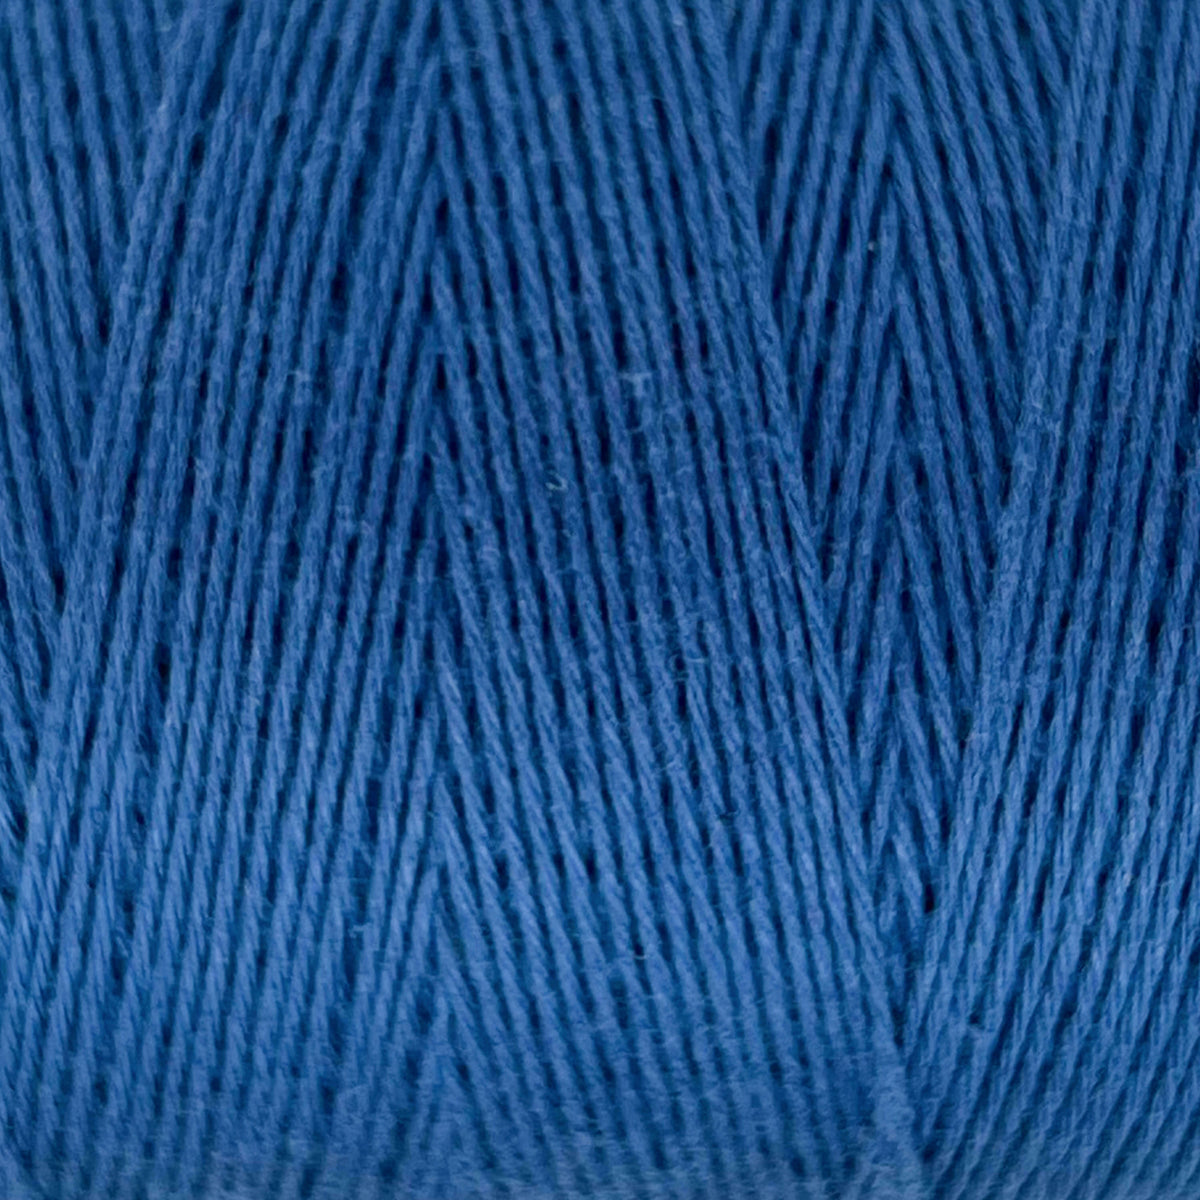 8/4 Cotton Warp Yarn - Small Cone - Natural and Colors